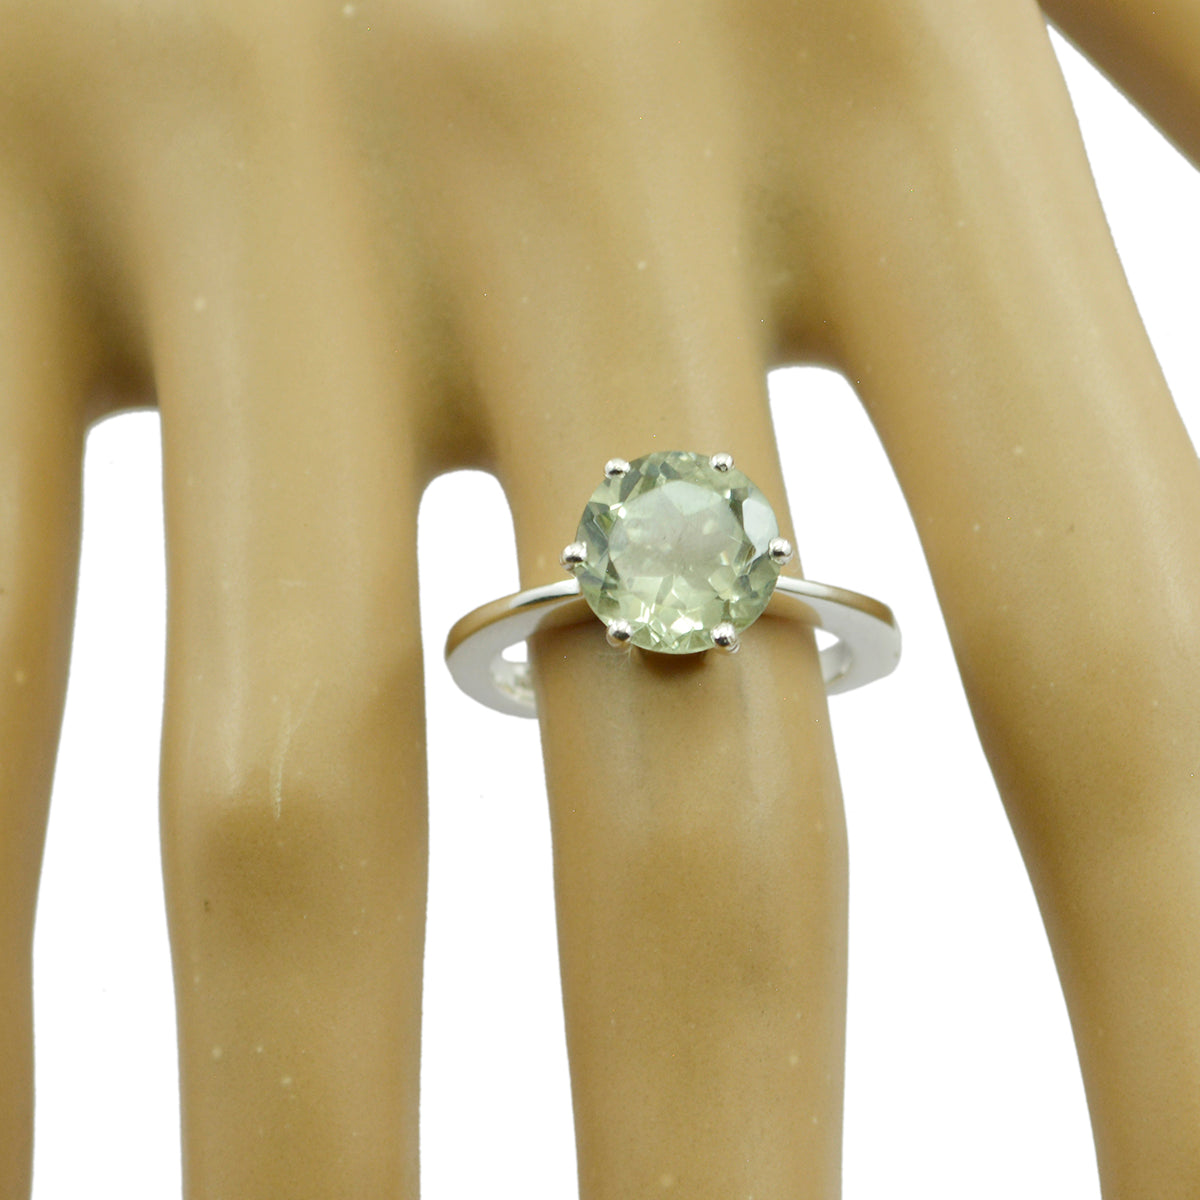 Symmetrical Gem Green Amethyst Sterling Silver Ring Hematite Jewelry